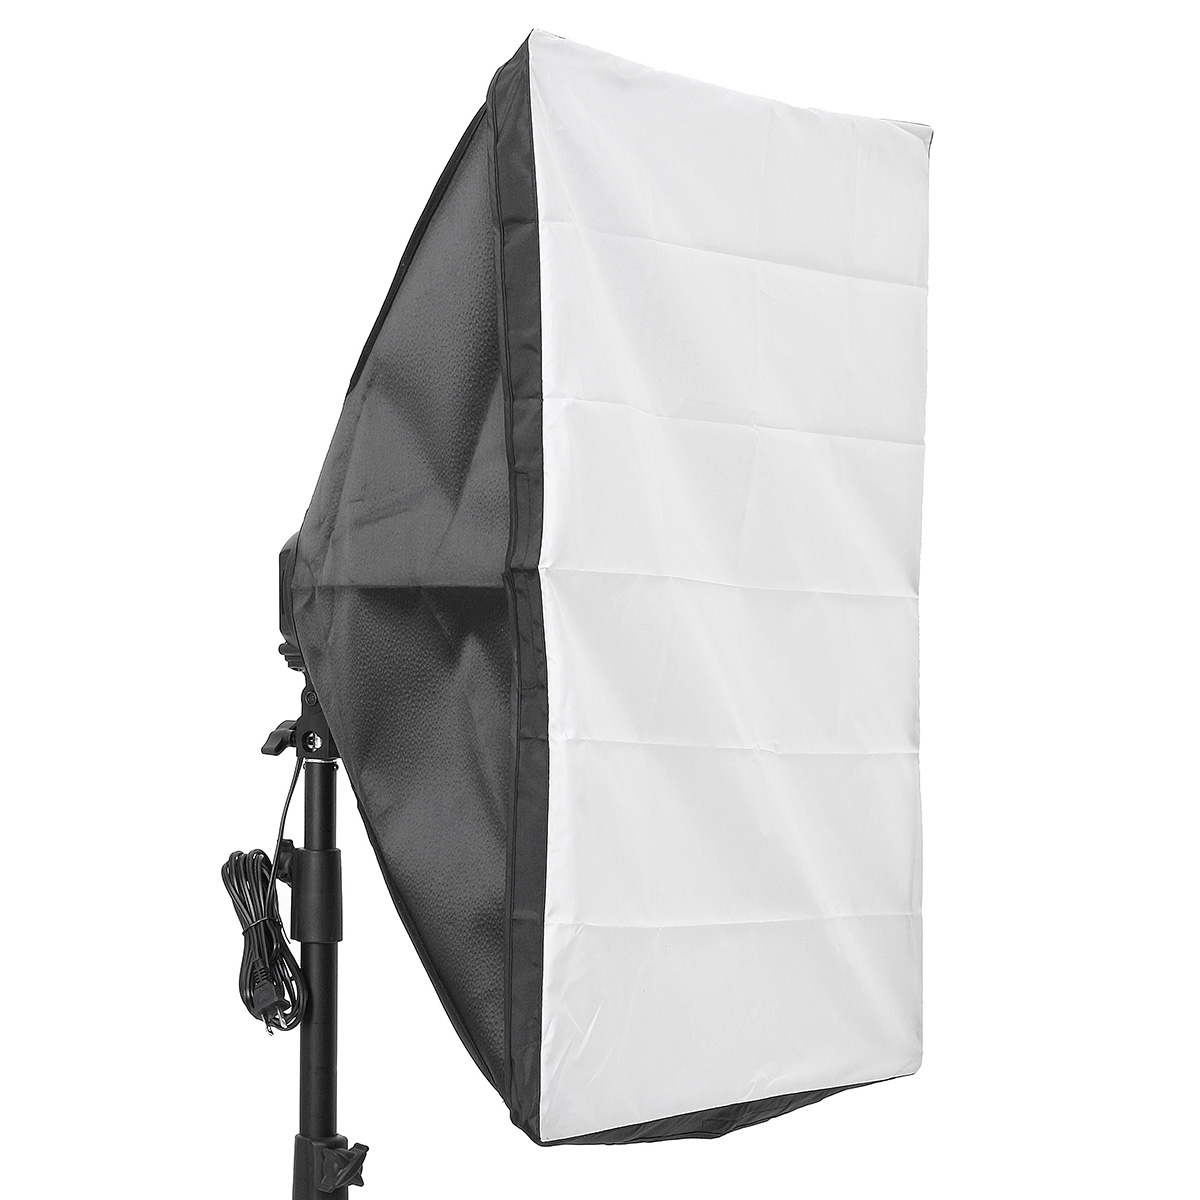 

Photo Video Studio Lighting 50x70cm Softbox Light 4 Разъем E27 Лампа Держатель Набор